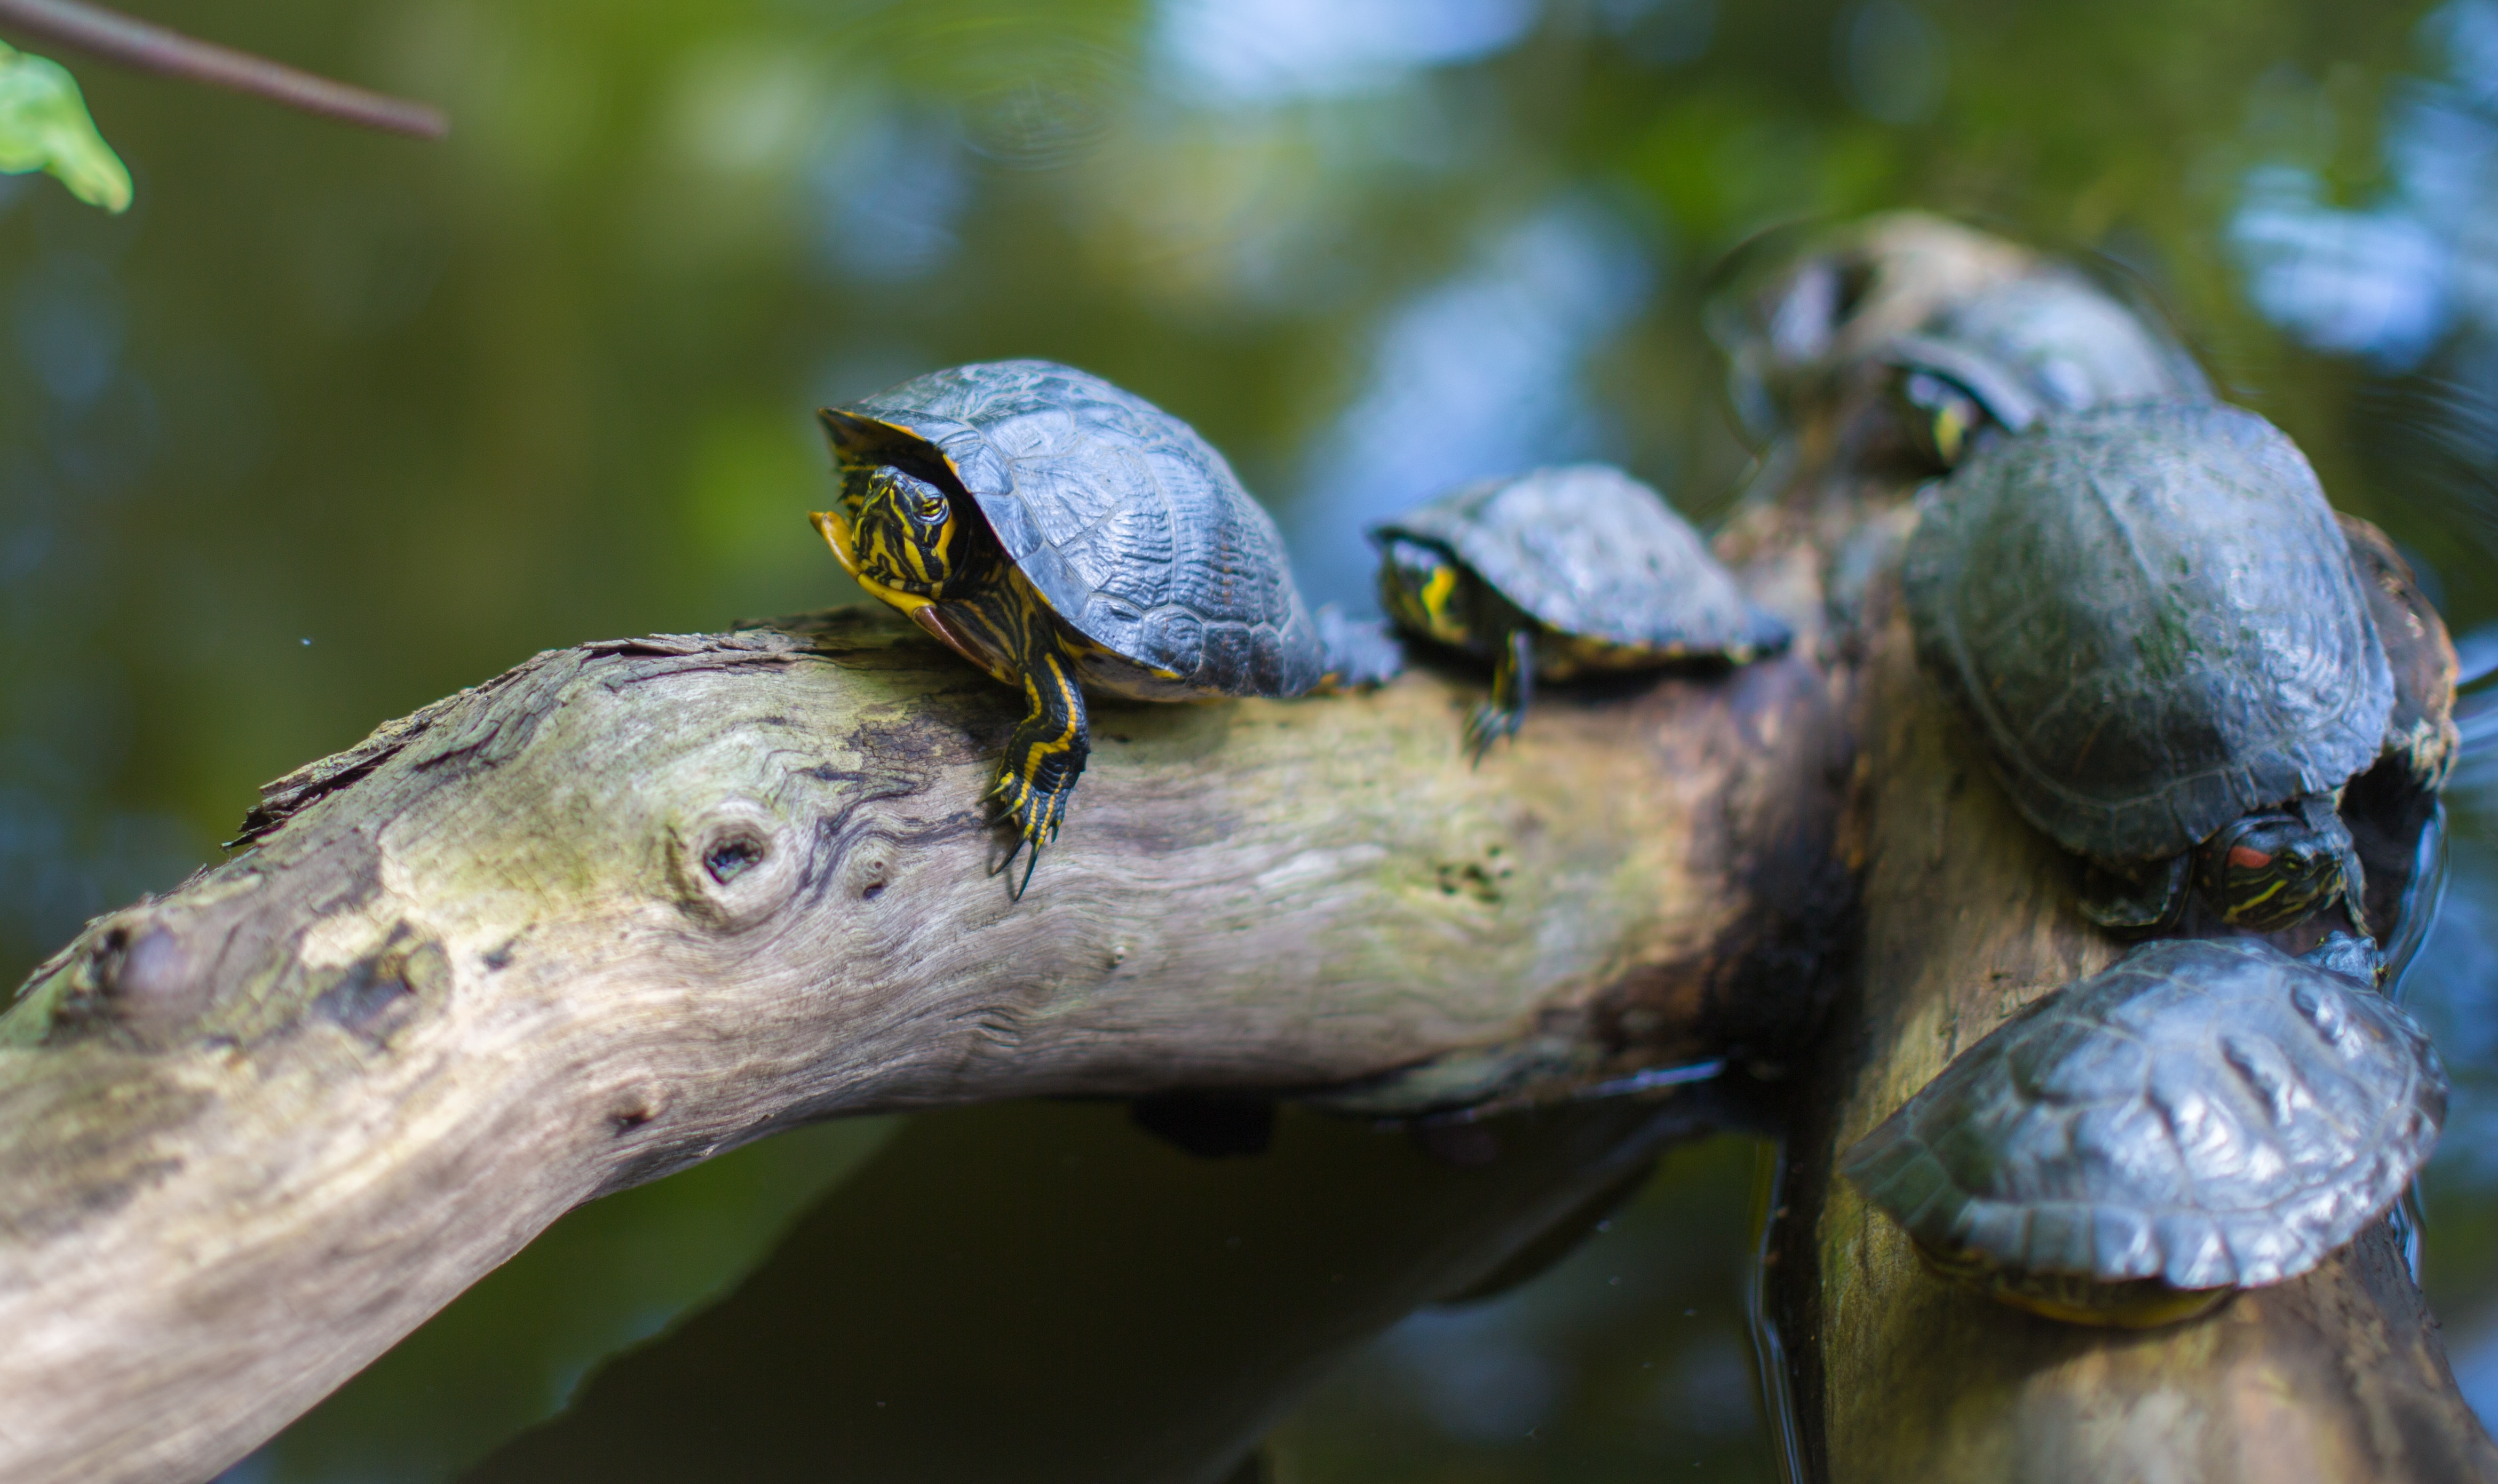 baby turtles on tree stem in body of water